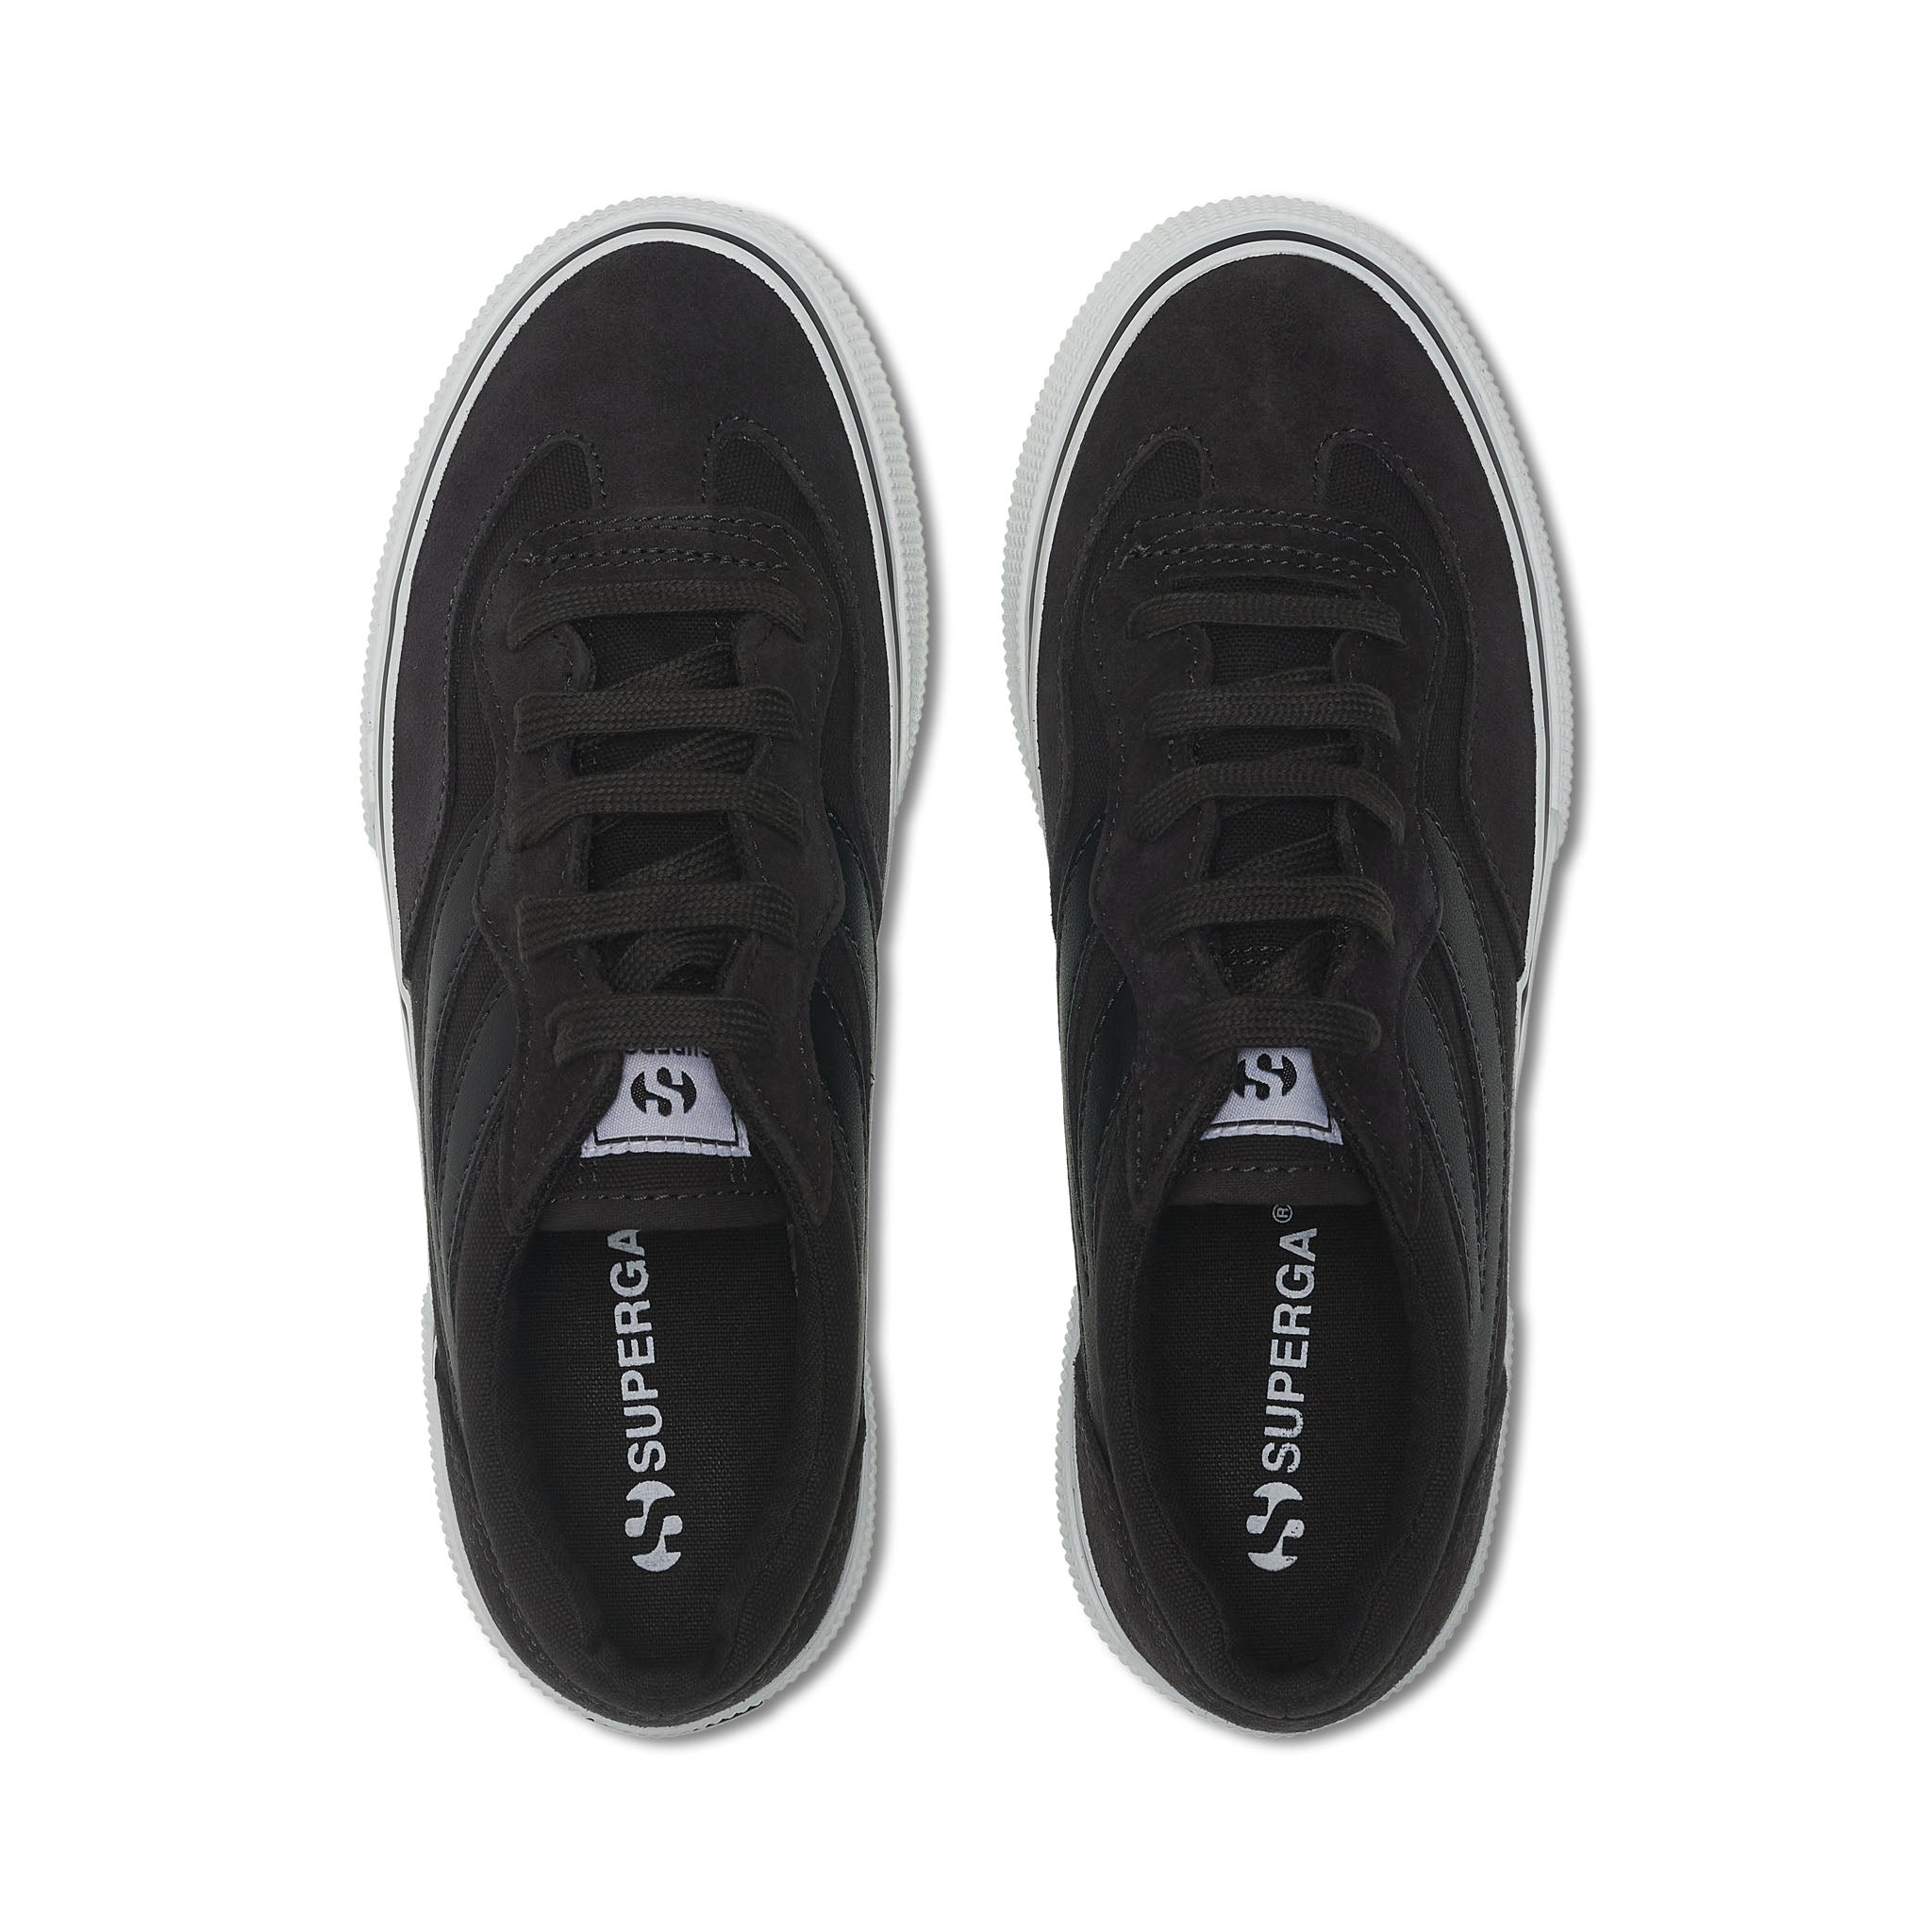 3041 Revolley Colorblock Platform Sneakers - Black Bristol Black Off White